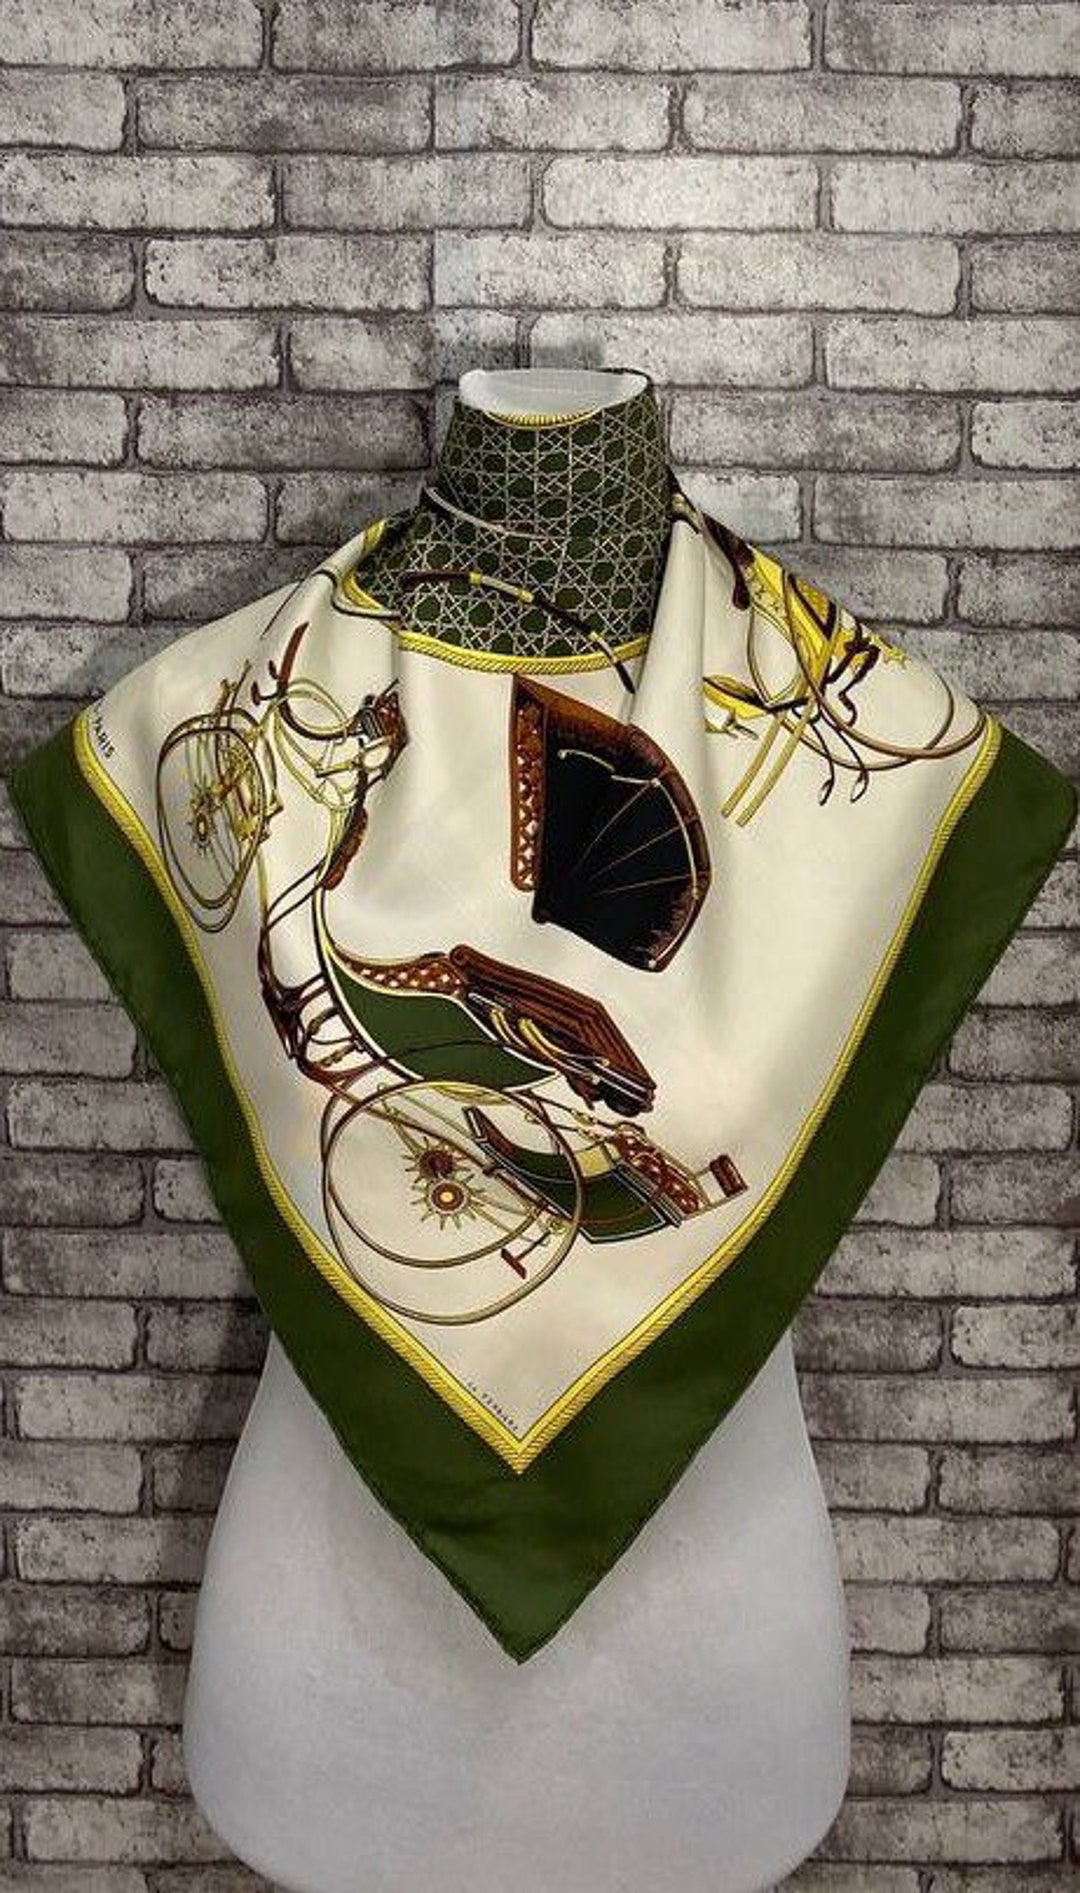 Printed silk scarf 'Les Voitures a Transformation', Hermès